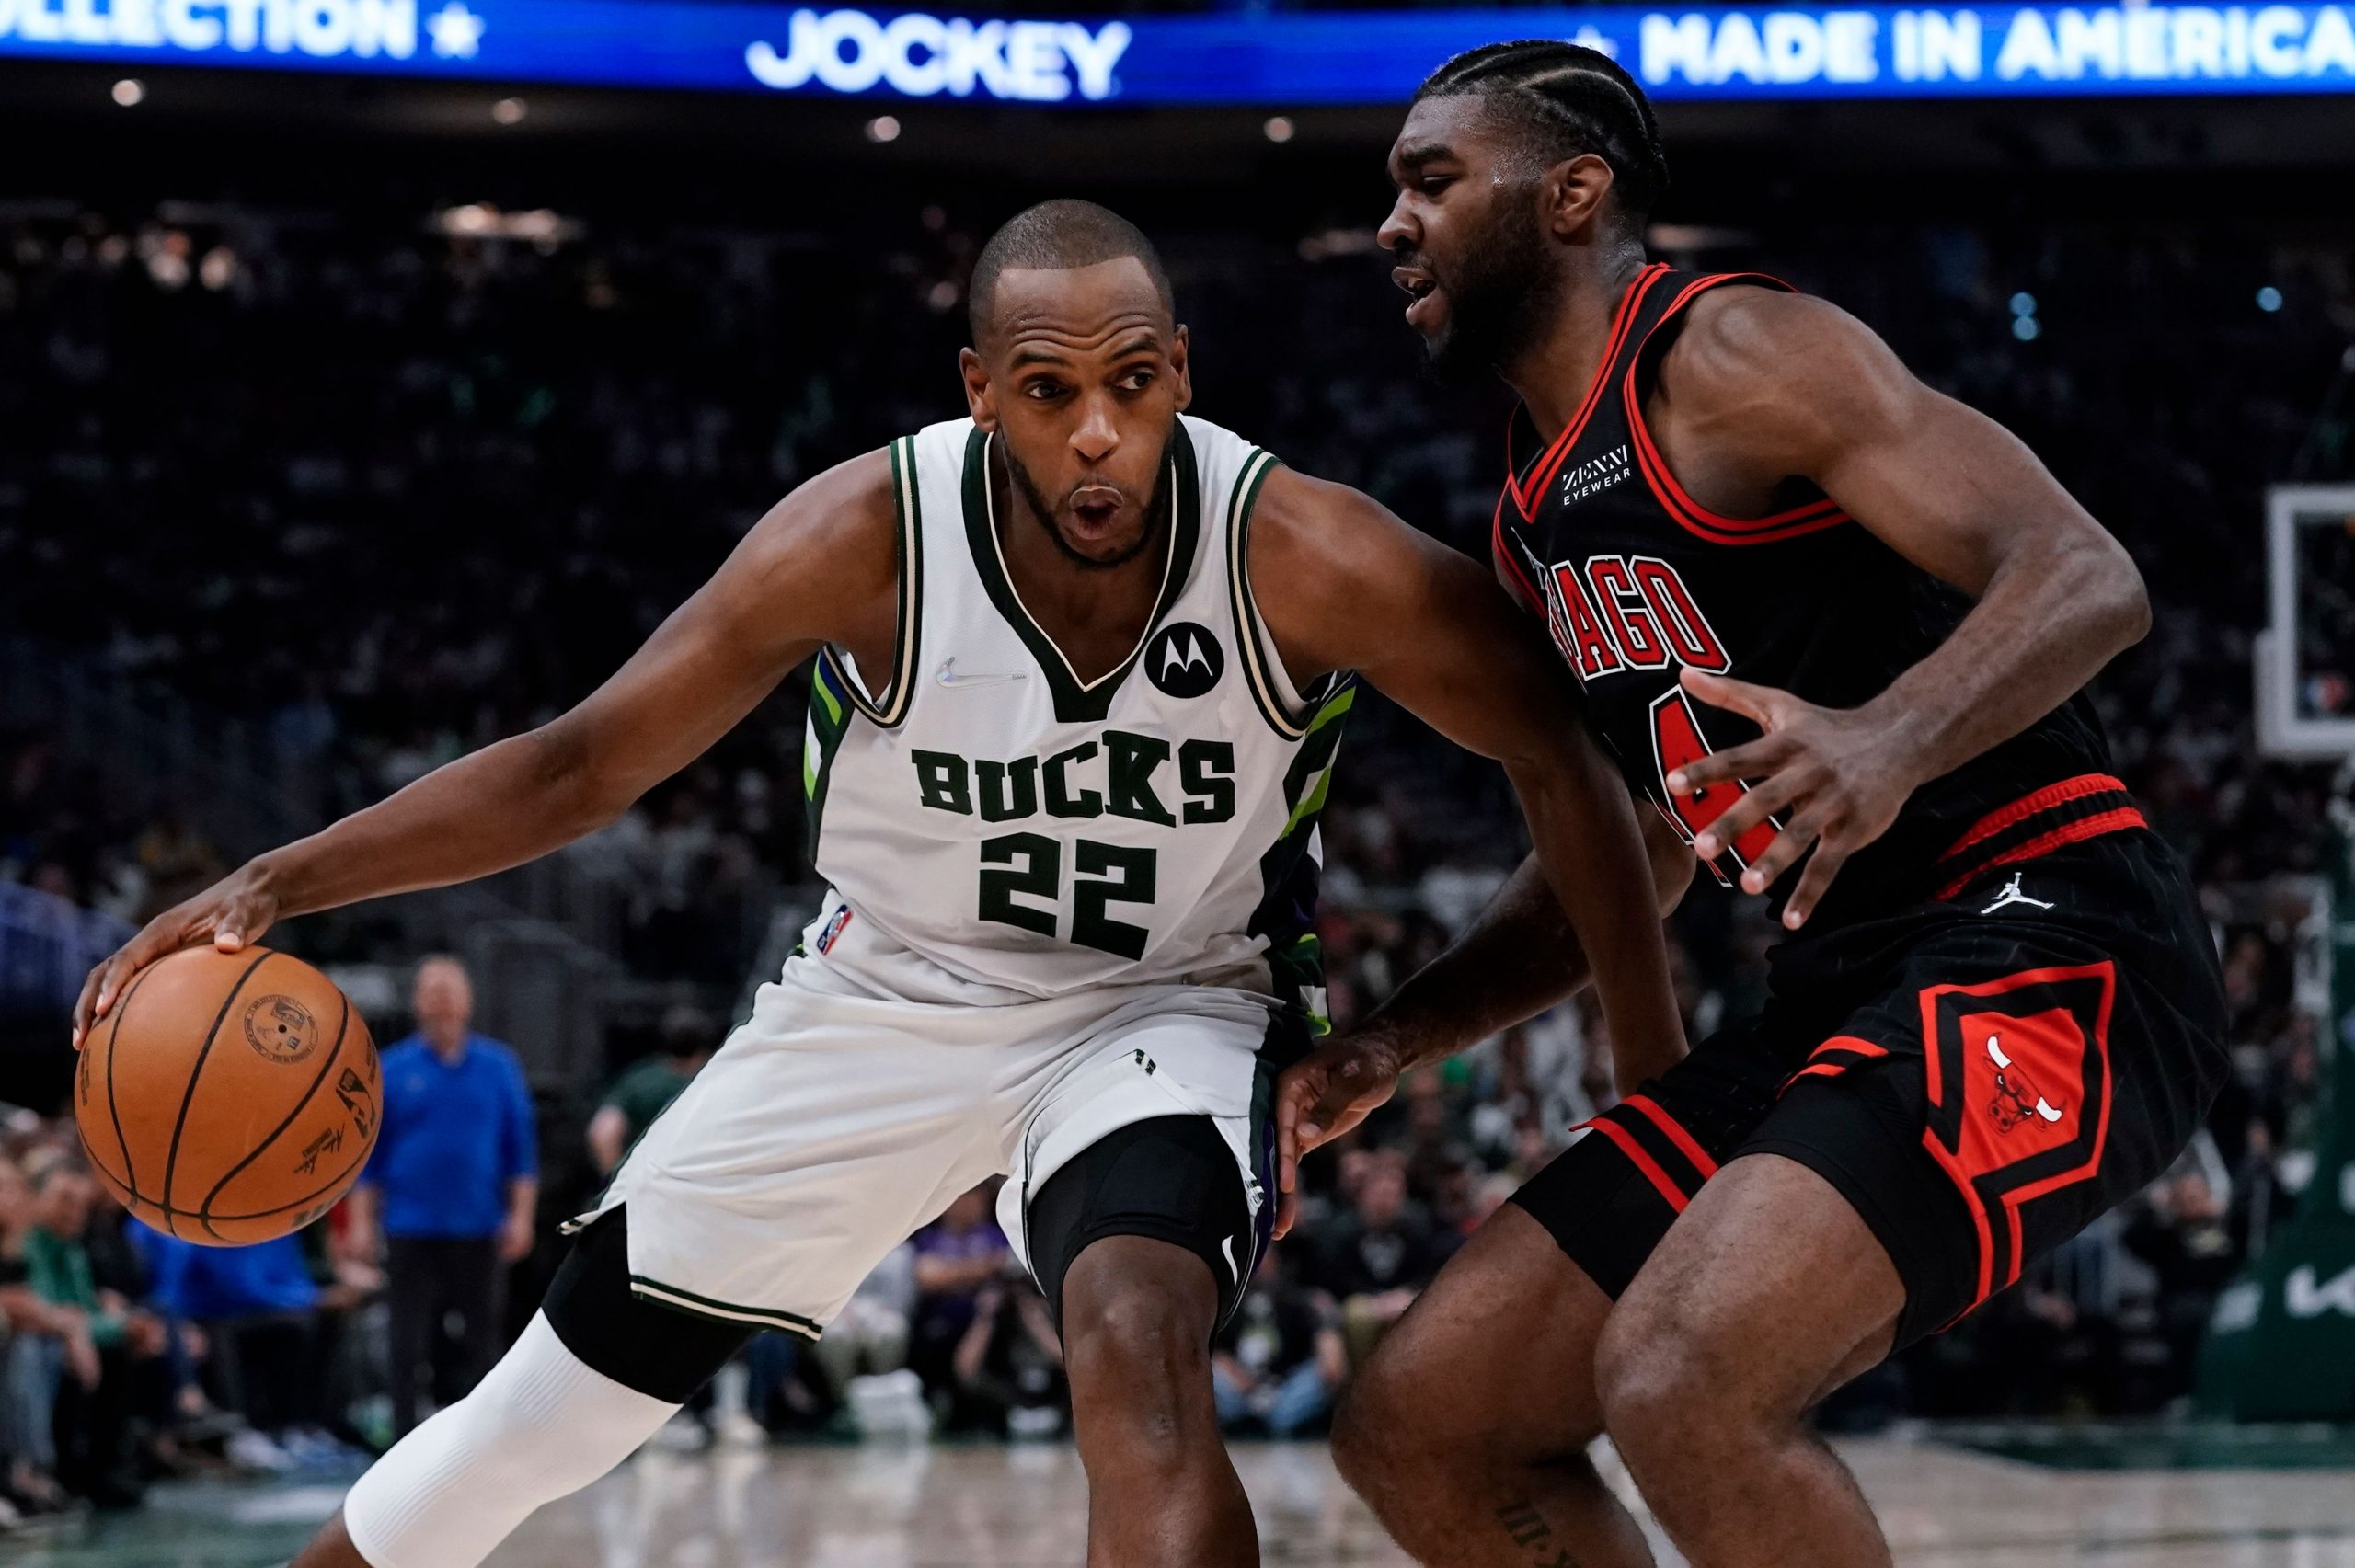 NBA: Slowed down by Khris Middleton’s injury, Bucks lose Playoff vs Bulls